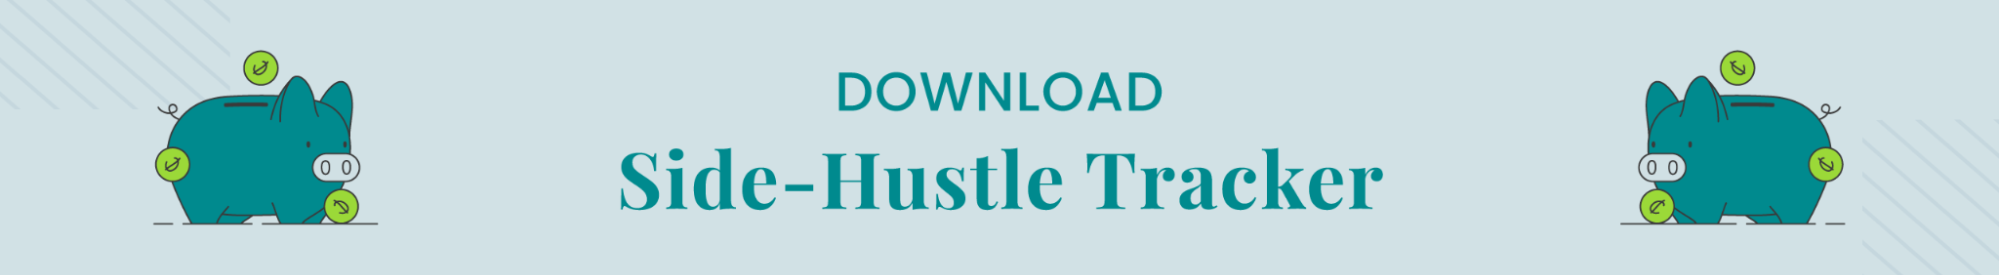 Download Side-Hustle Tracker button